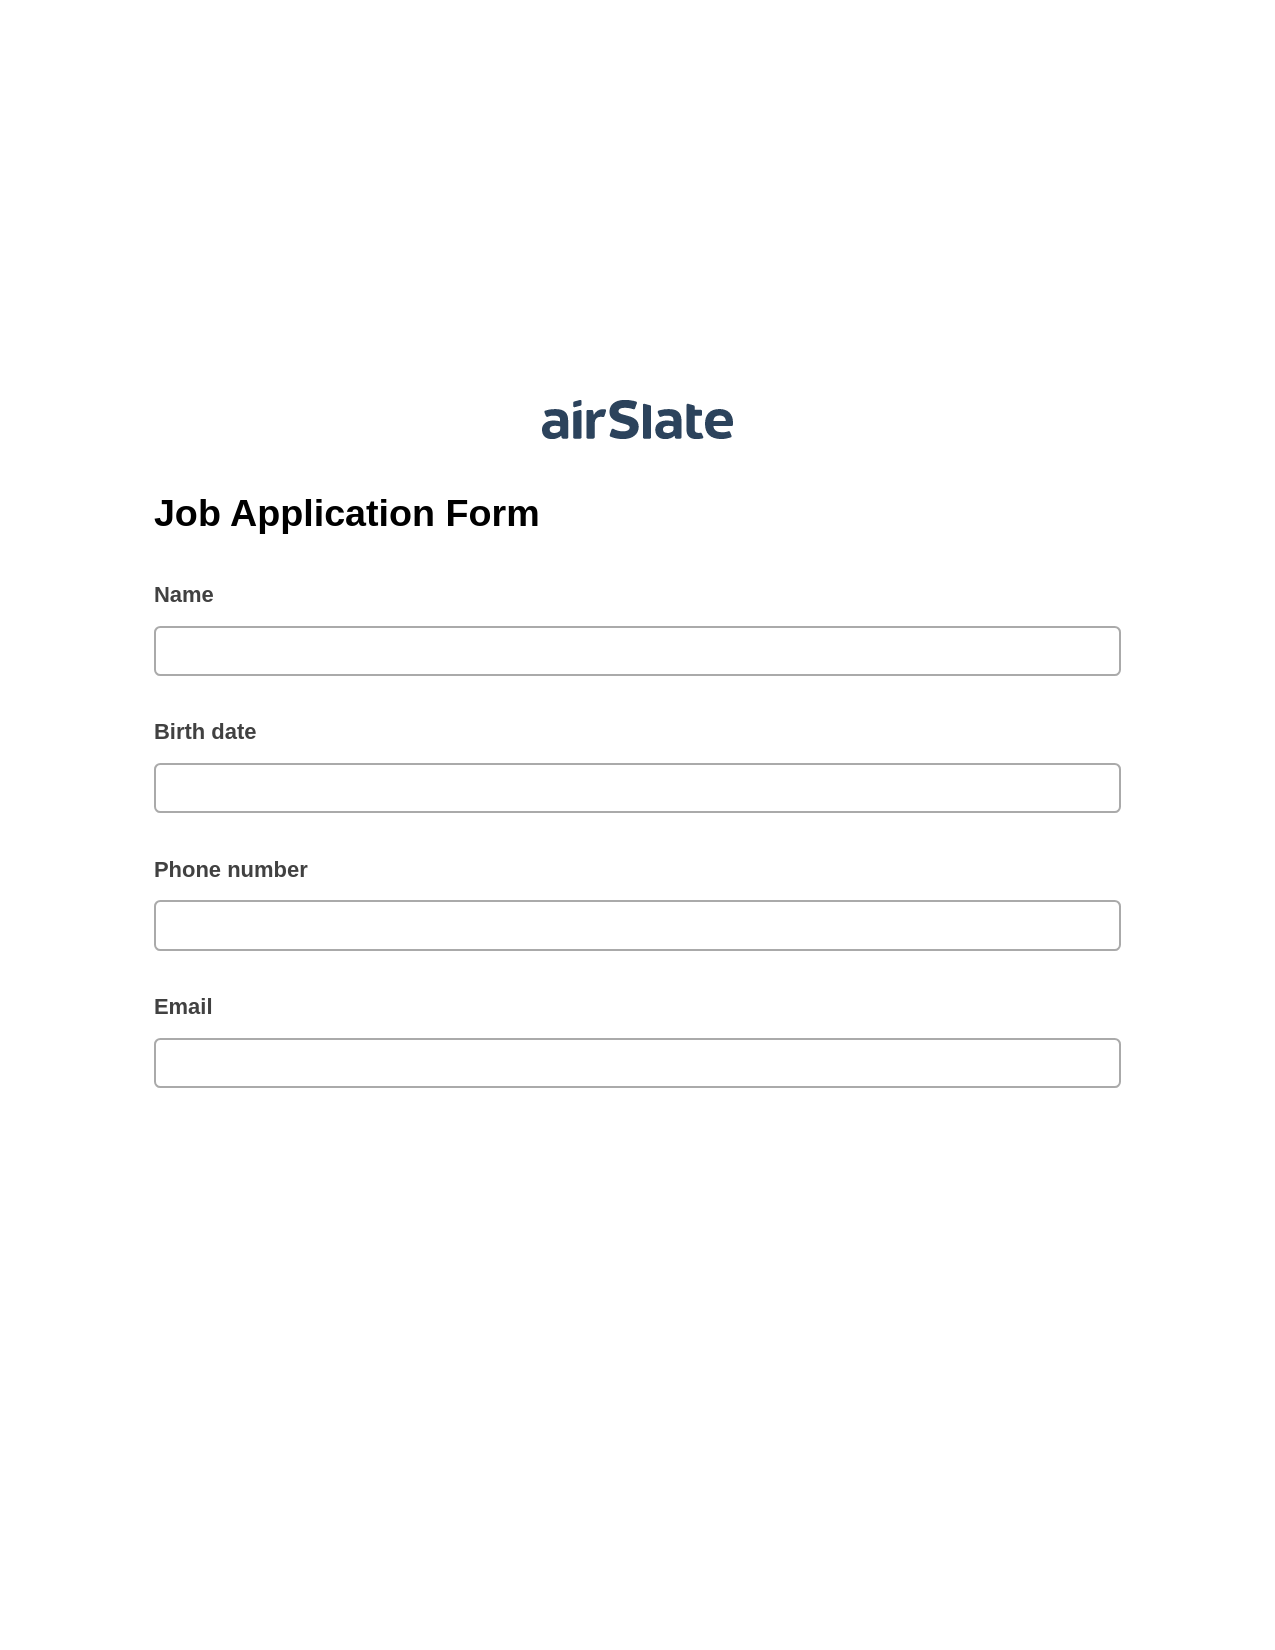 Multirole Job Application Form Pre-fill from CSV File Dropdown Options Bot, Create slate addon, Slack Two-Way Binding Bot